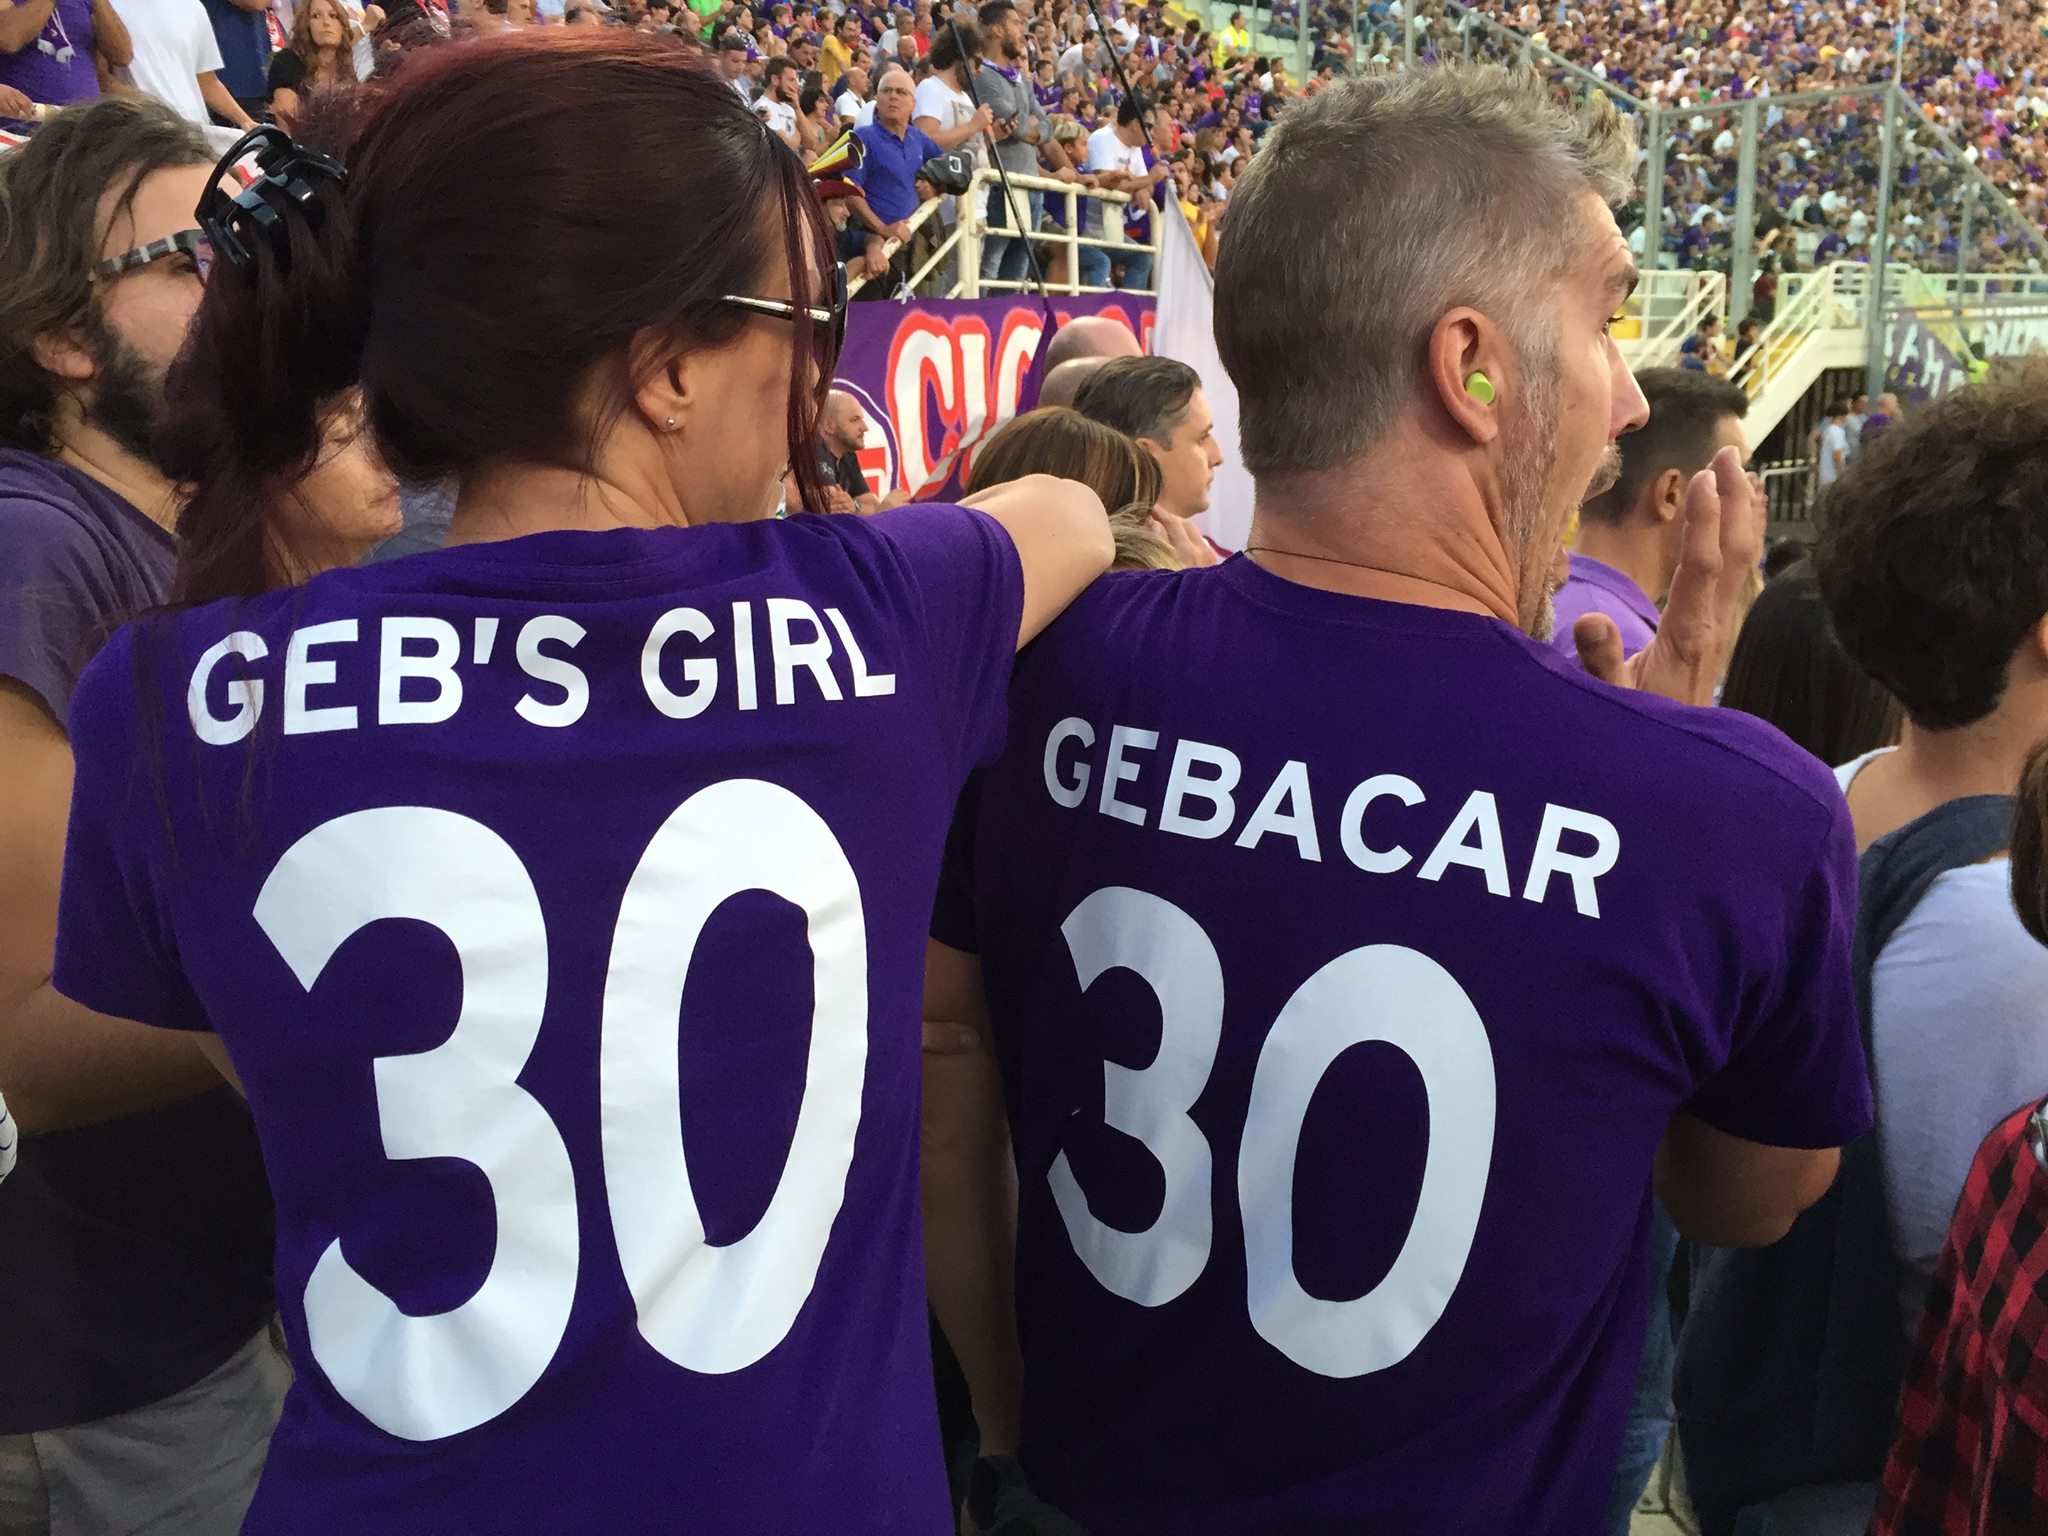 Marì and Håkon Gebhardt at the stadium sporting custom made shirts!